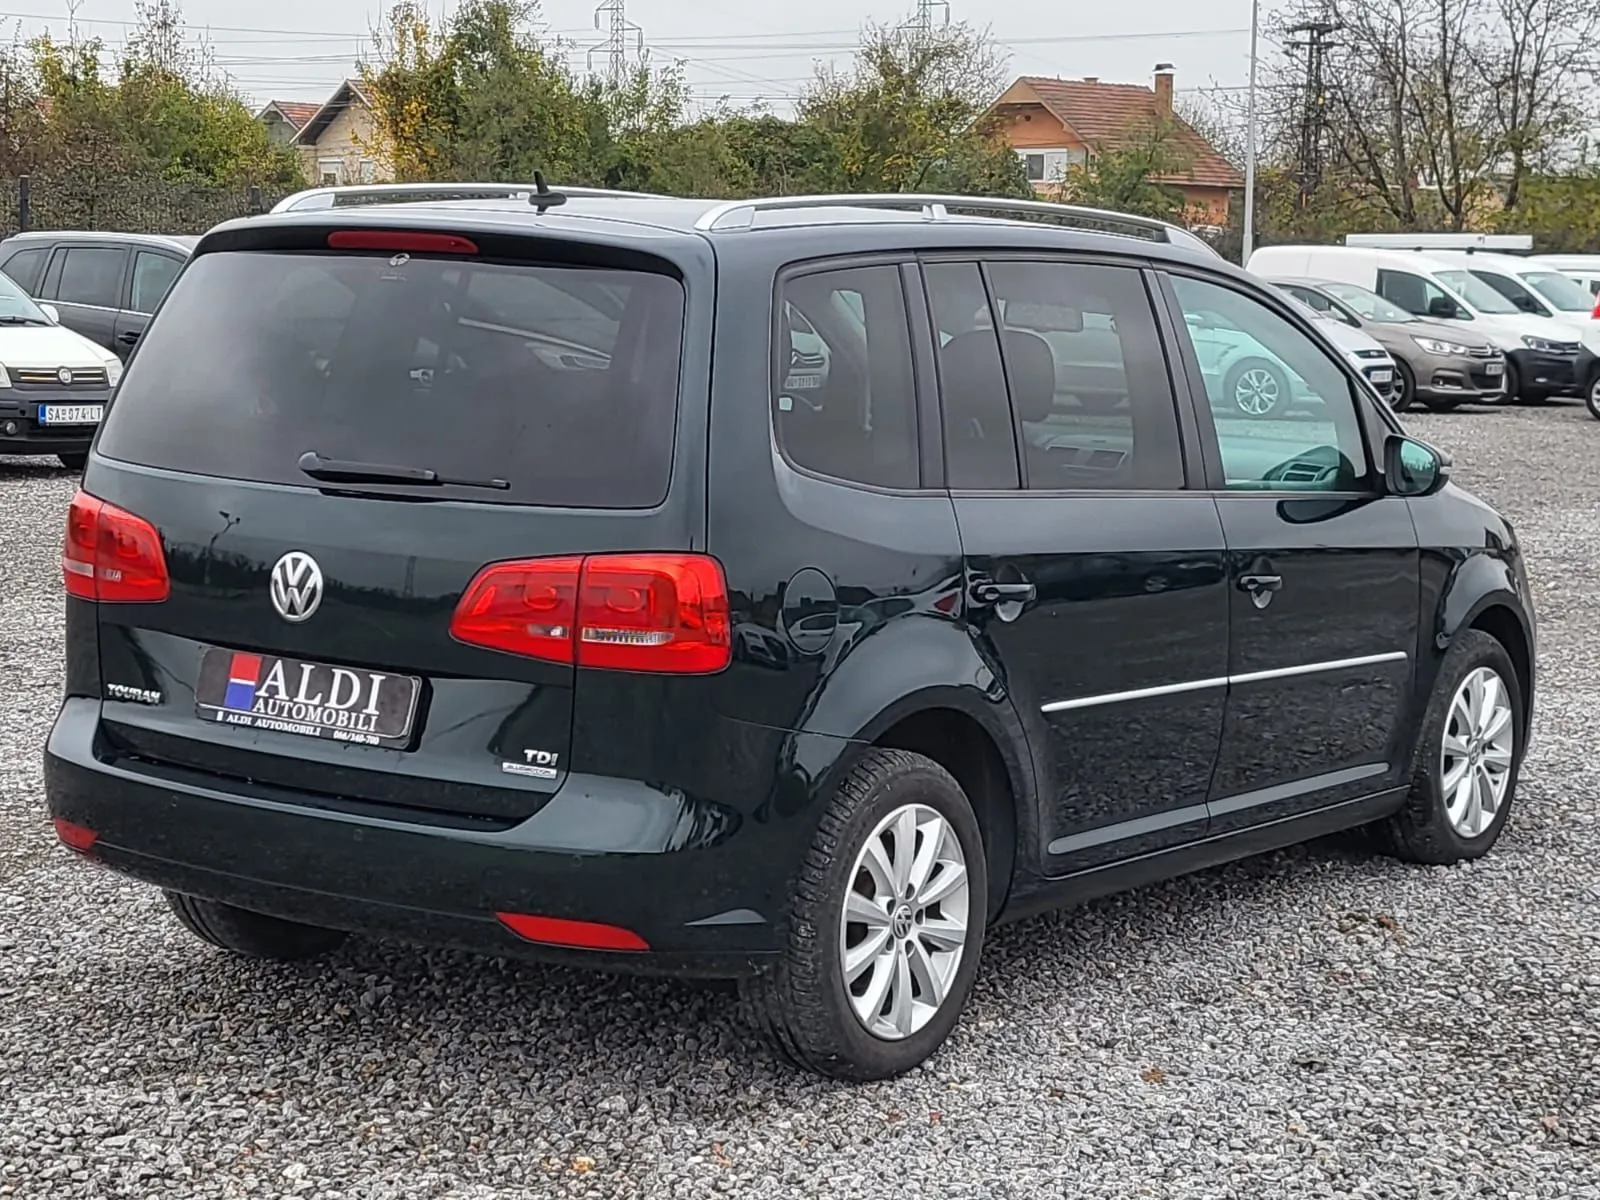 Volkswagen Touran 1.6 Tdi/7 sed Image 7